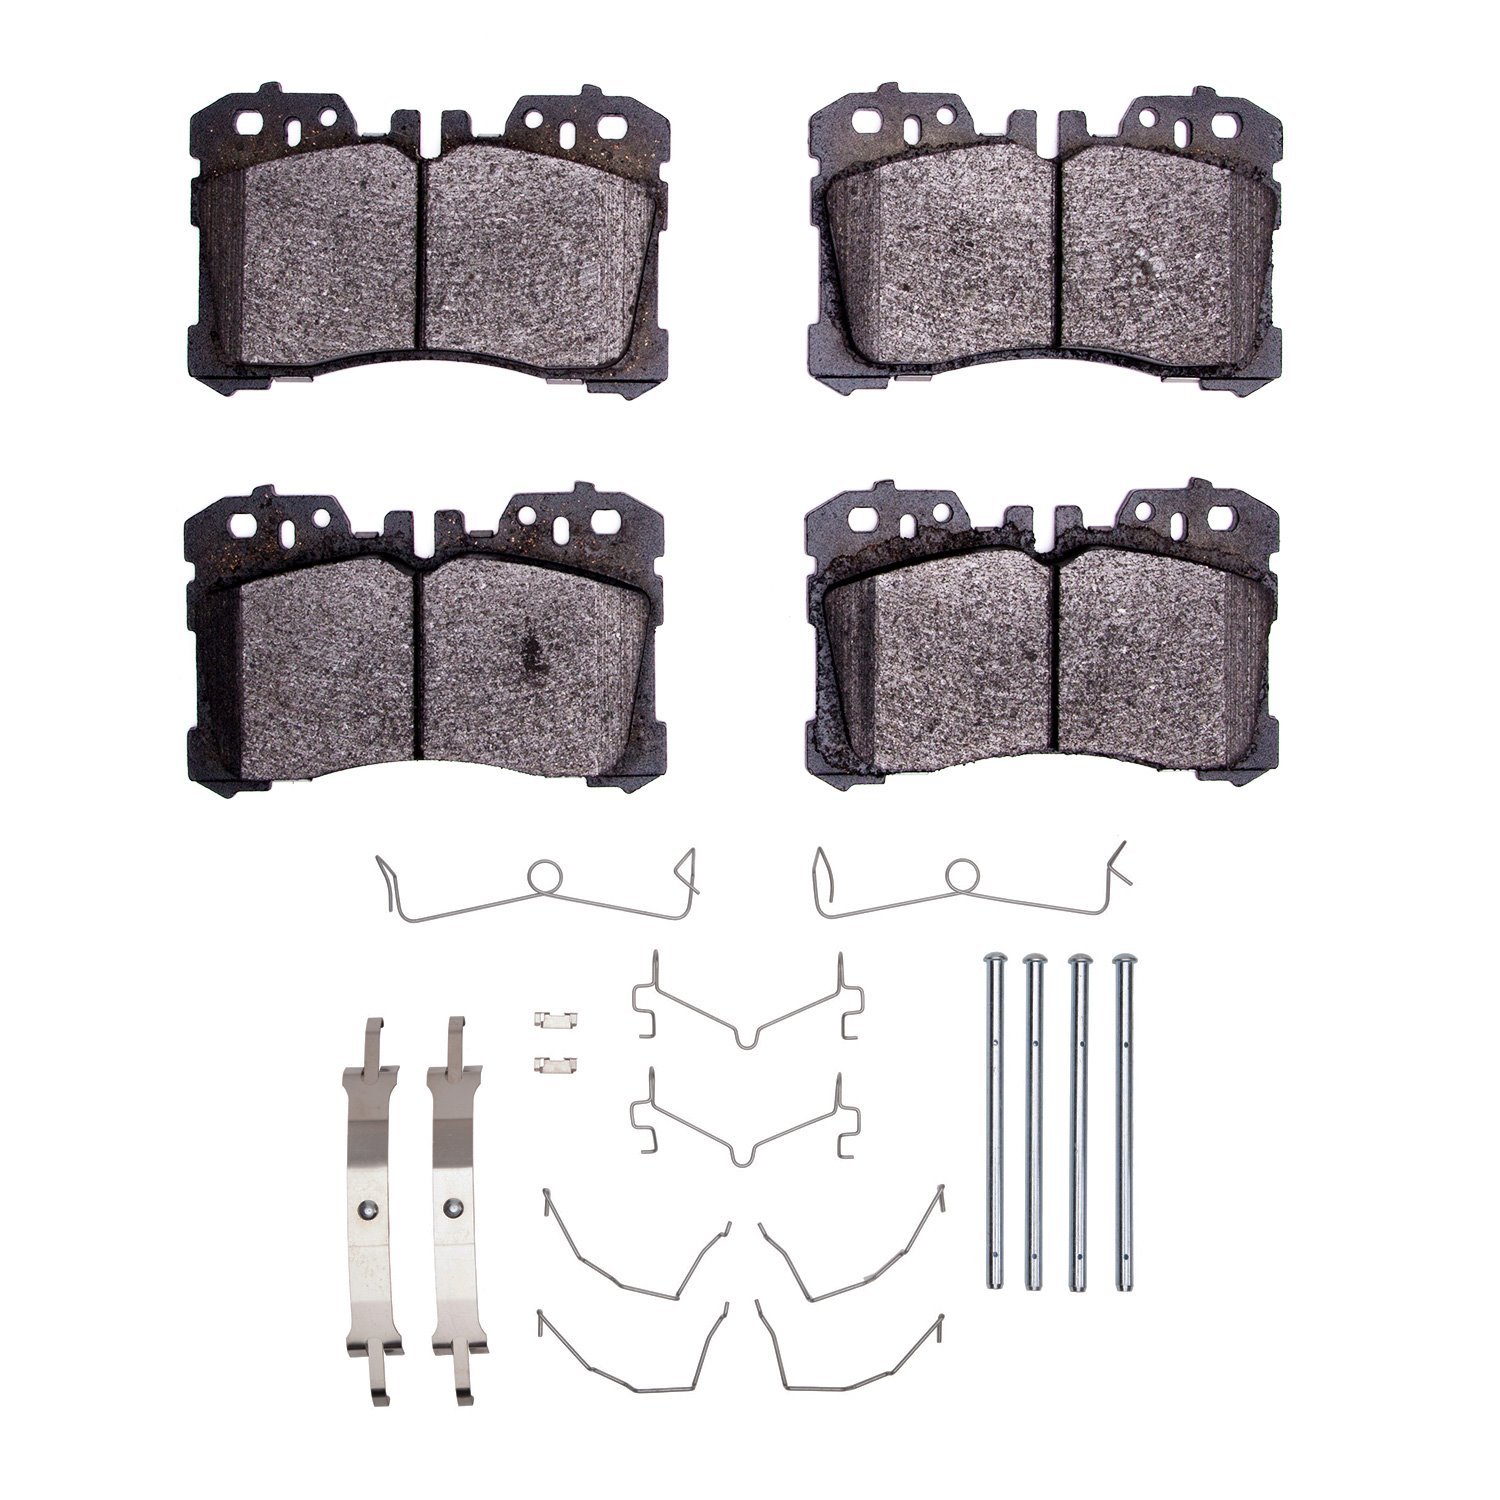 1310-1282-01 3000-Series Ceramic Brake Pads & Hardware Kit, Fits Select Lexus/Toyota/Scion, Position: Front